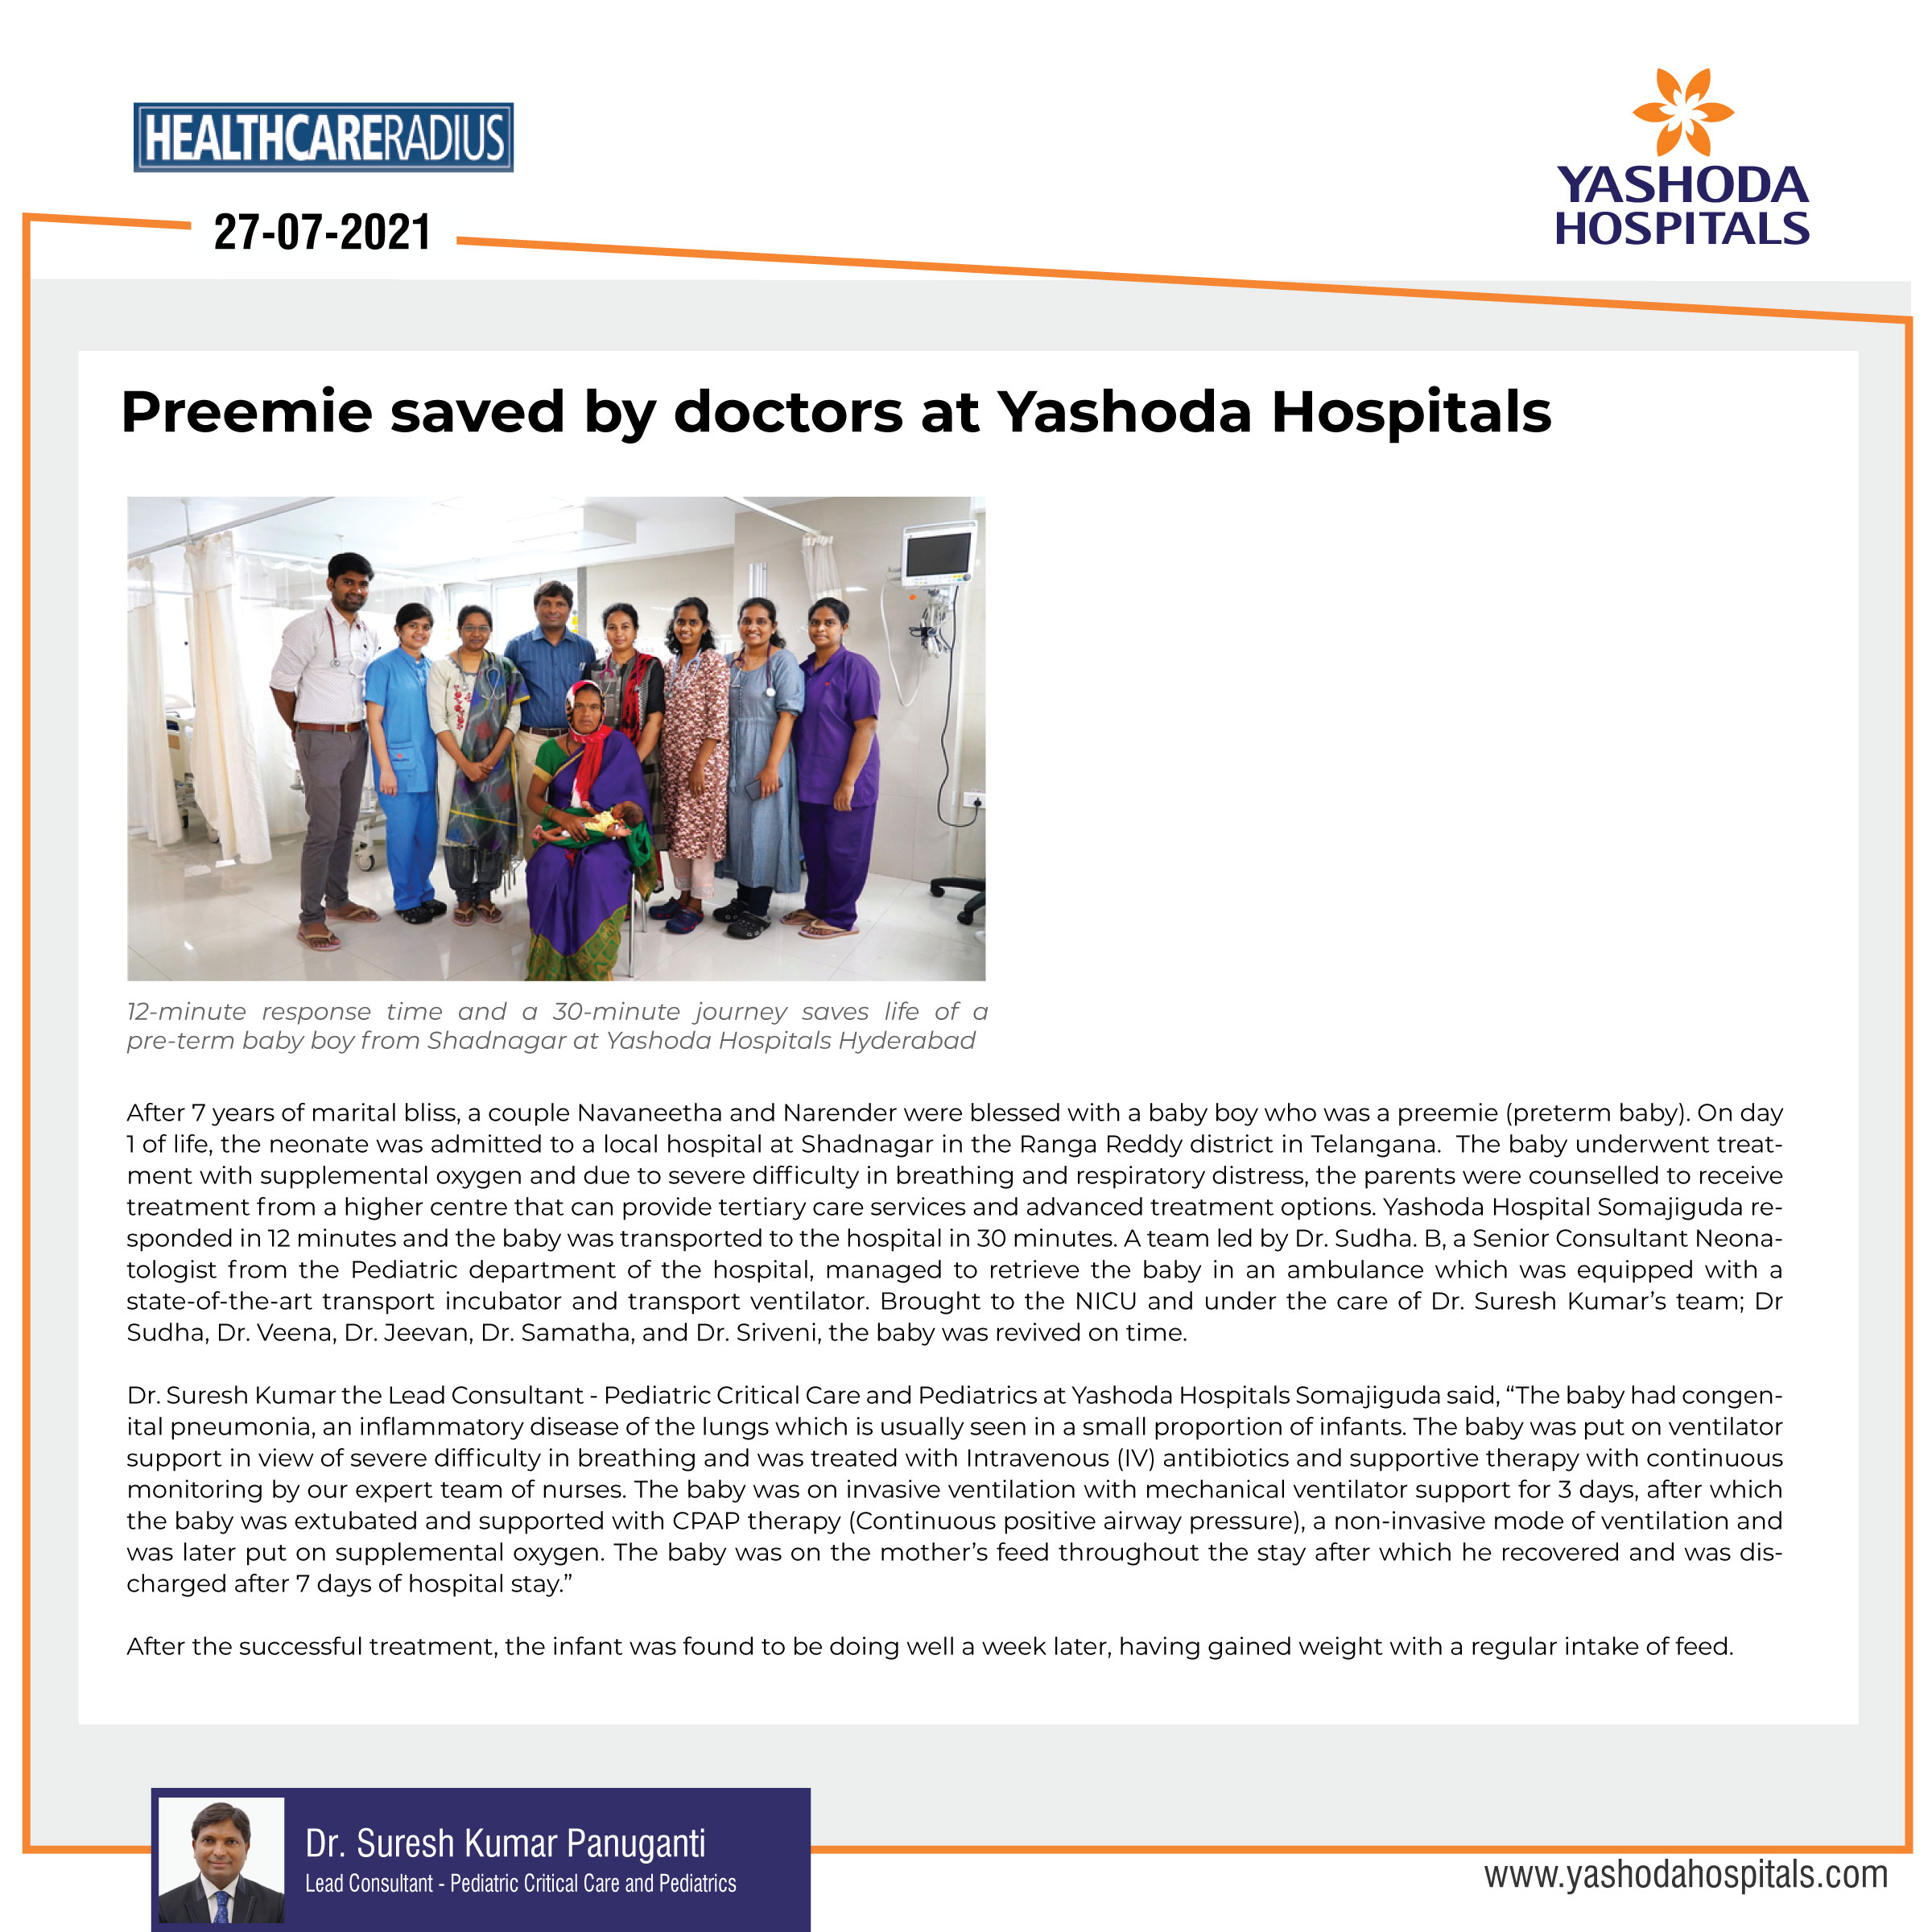 Preemie baby boy saved by Yashoda doctors